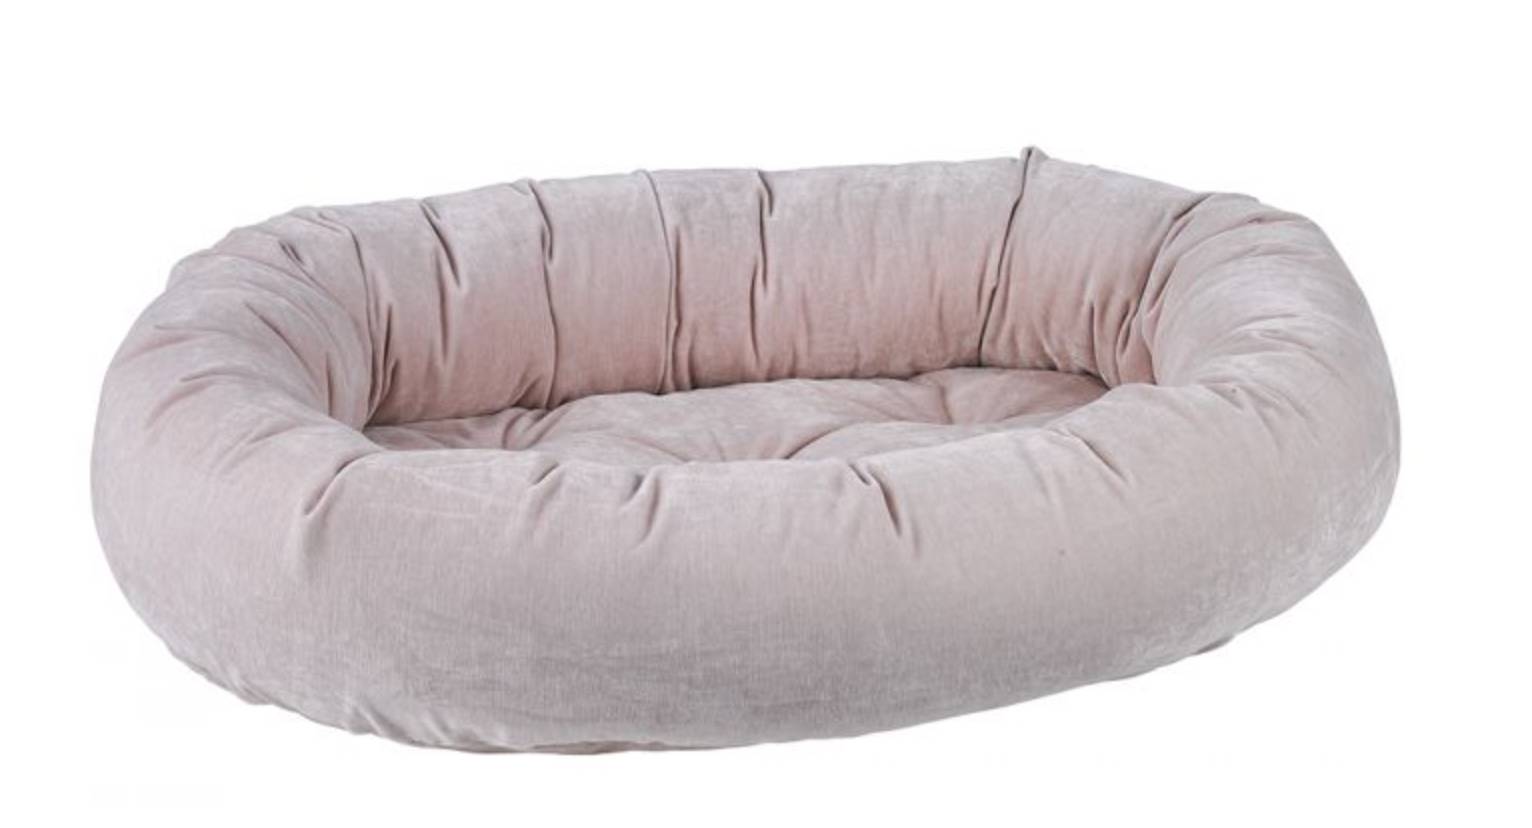 Bowsers Donut Dog Bed - Washed Microvelvet - Blush